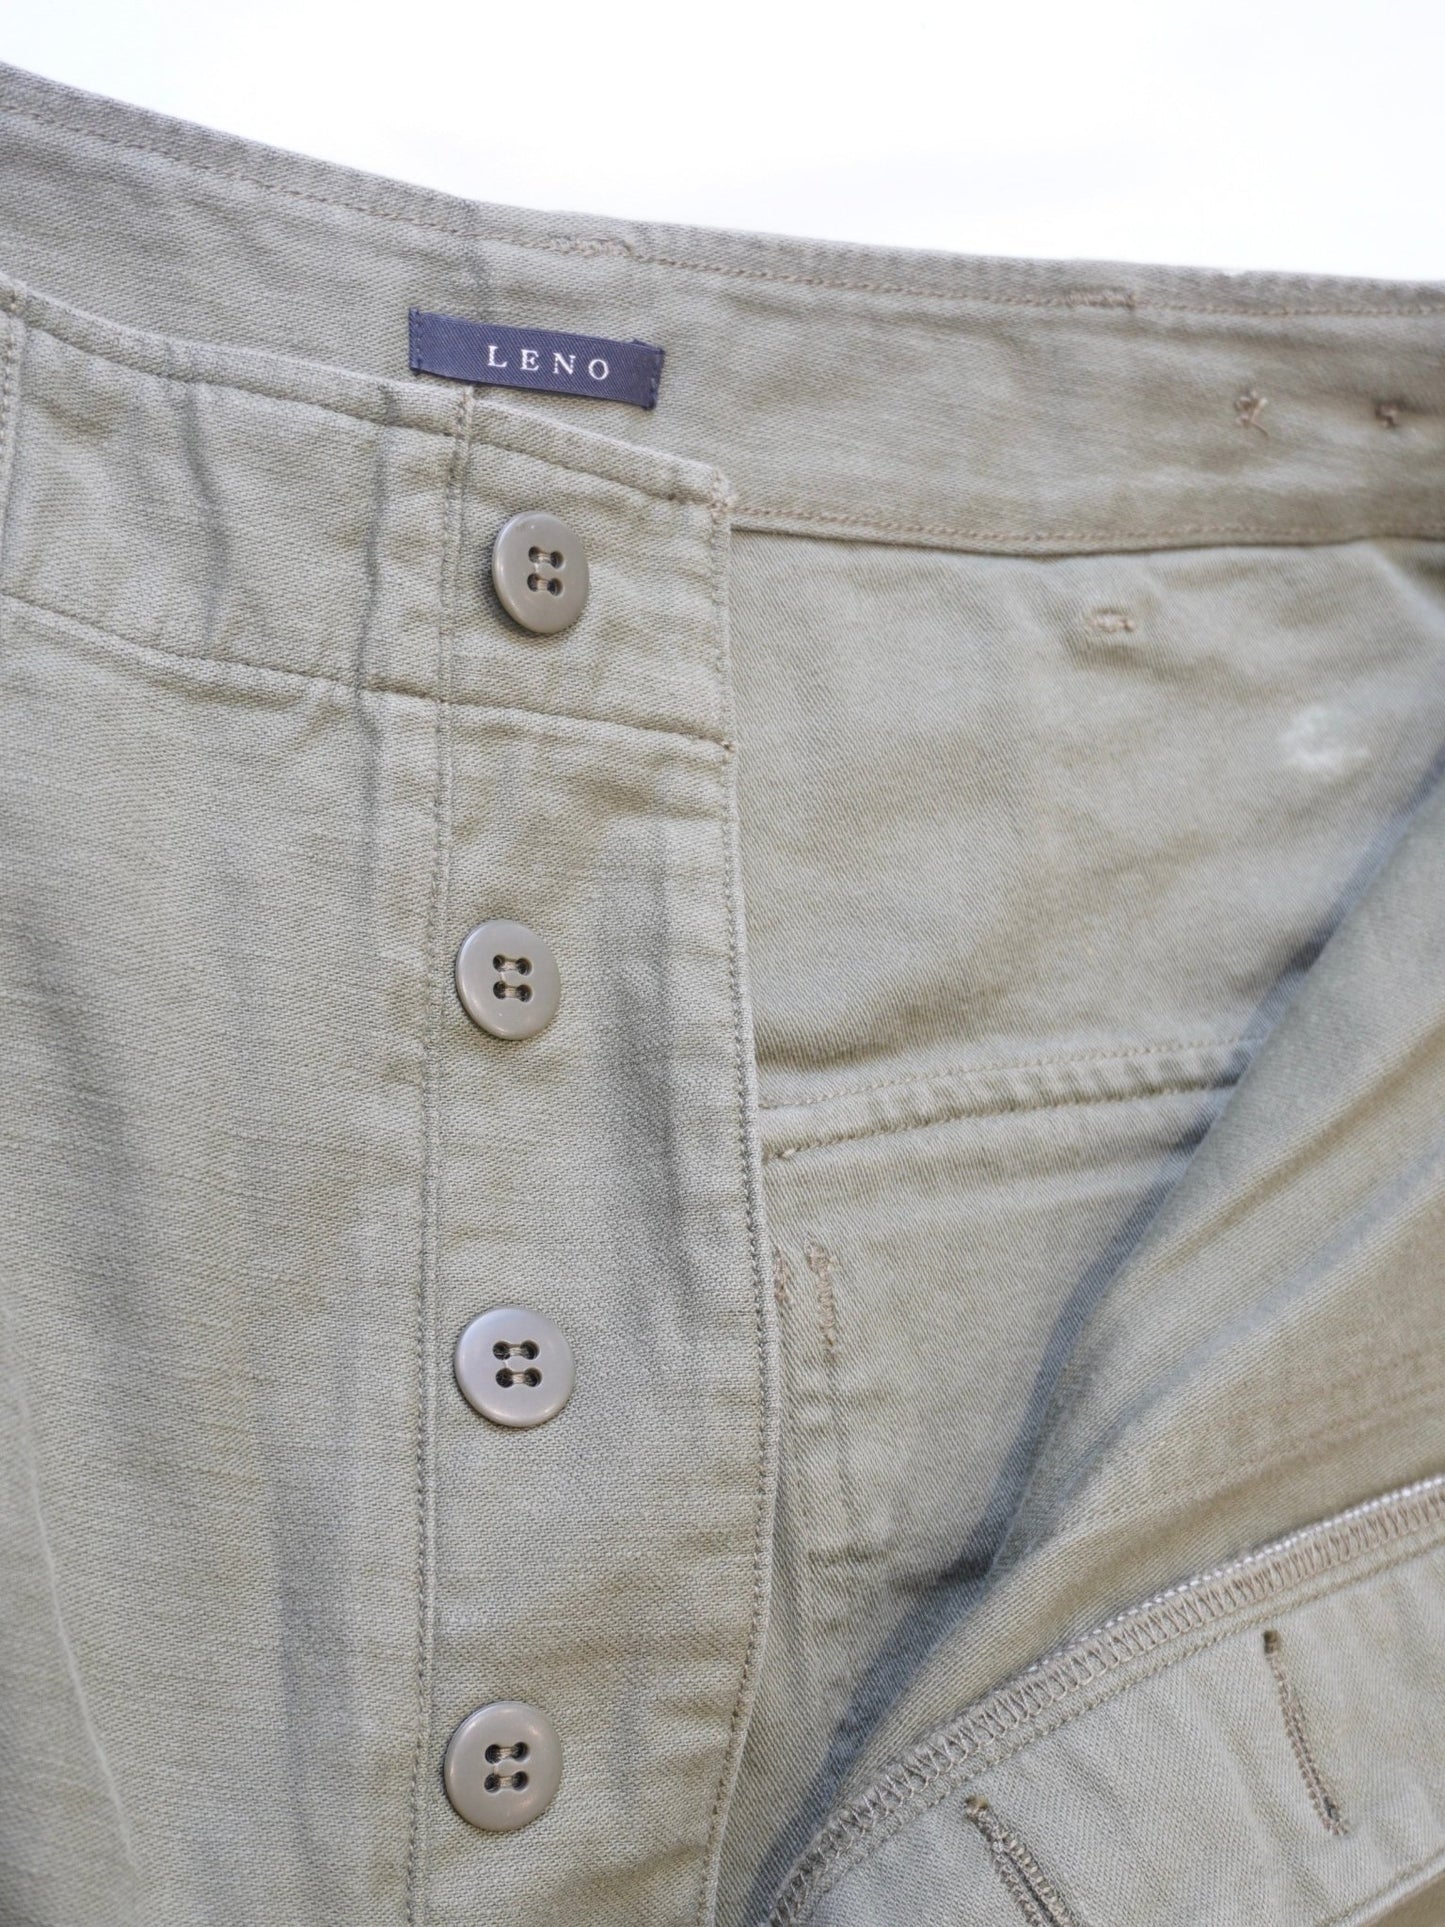 [LENO] BAKER PANTS FADE パンツ - #shop_name #アパルティール# #名古屋# #セレクトショップ#